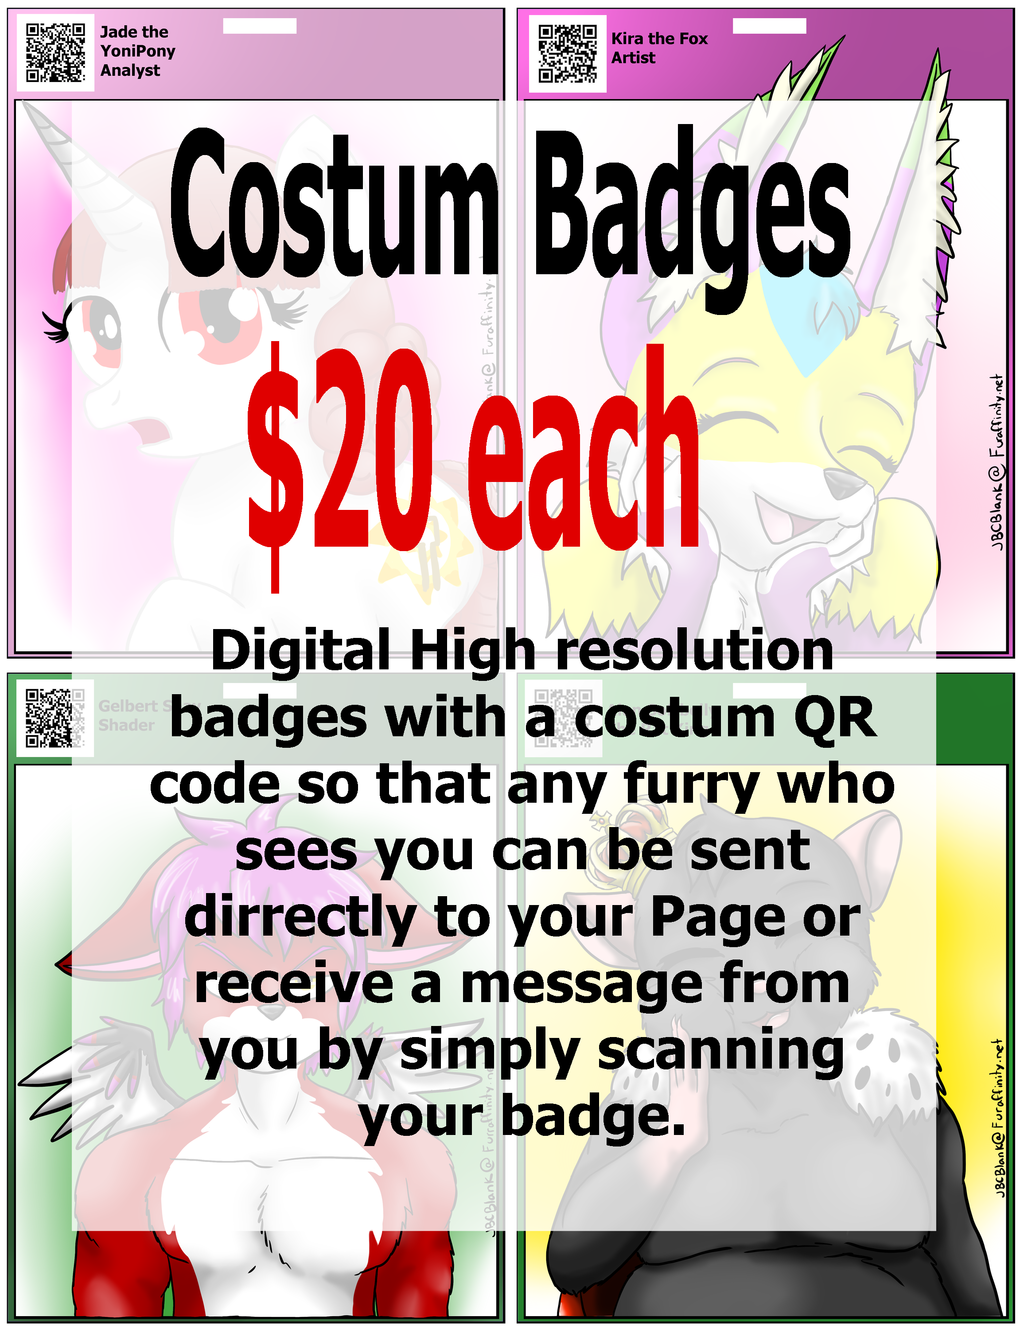 Digital badges